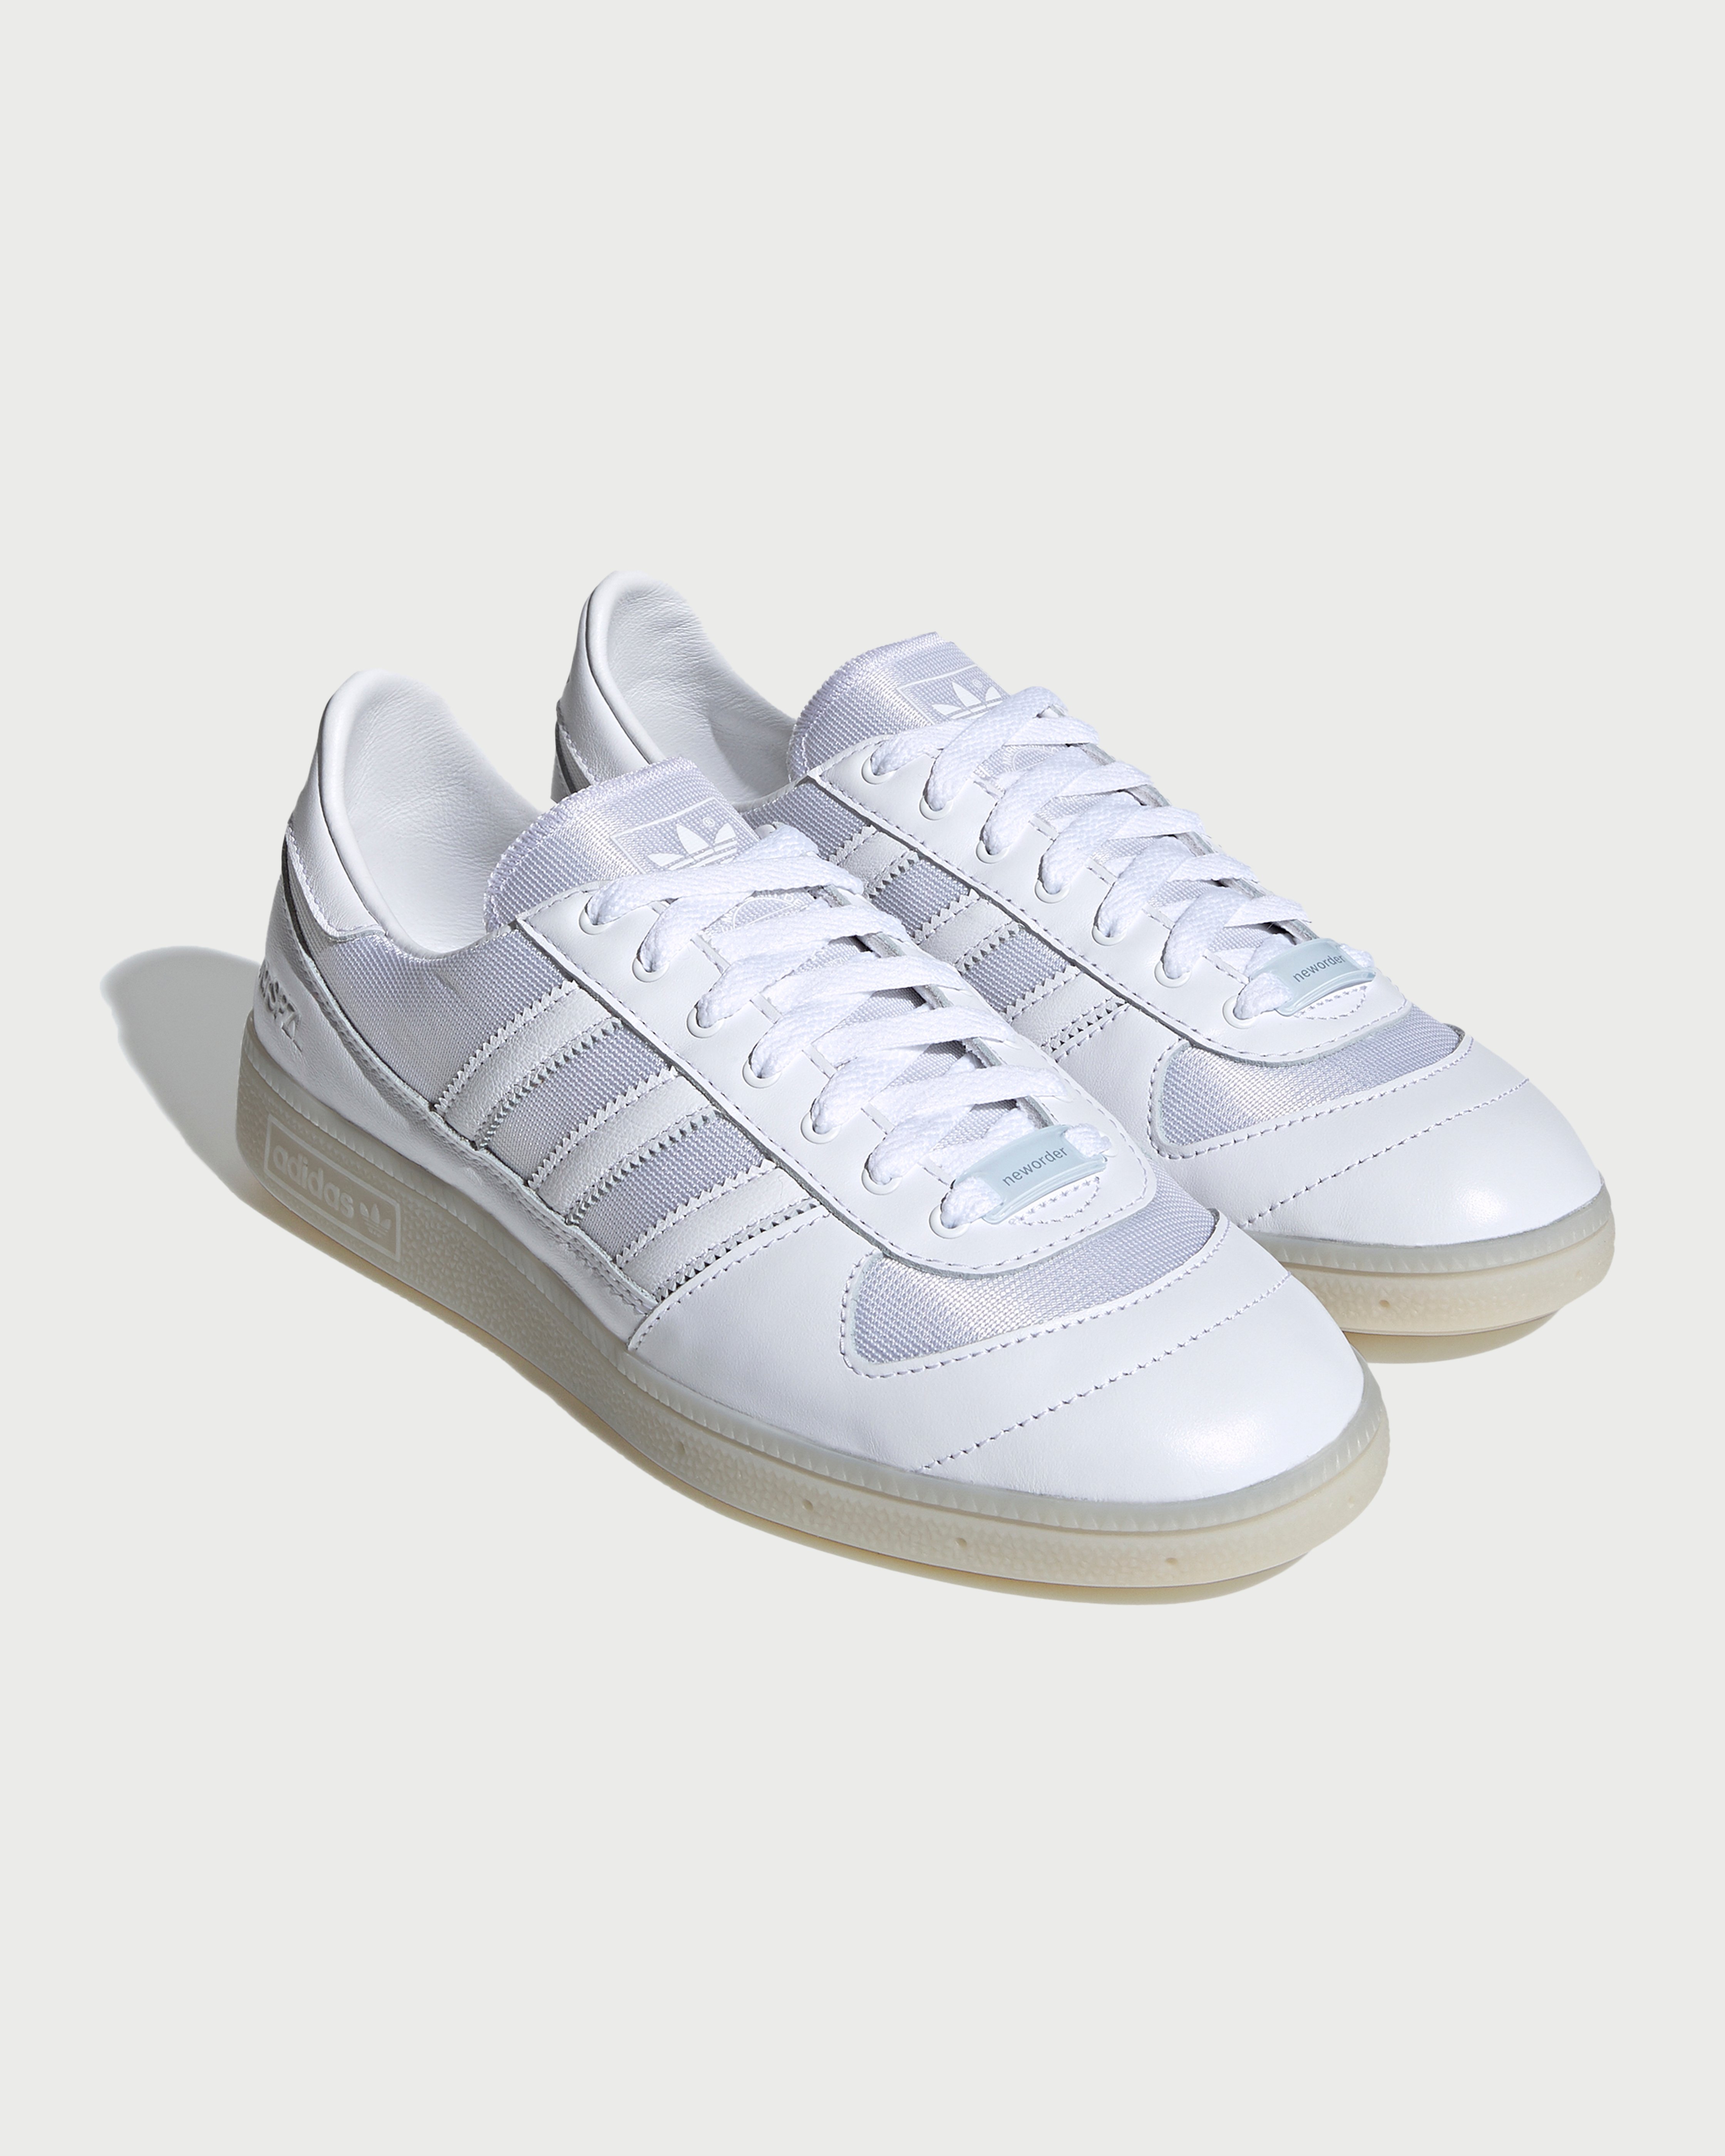 Adidas - Wilsy Spezial x New Order White - Footwear - White - Image 2